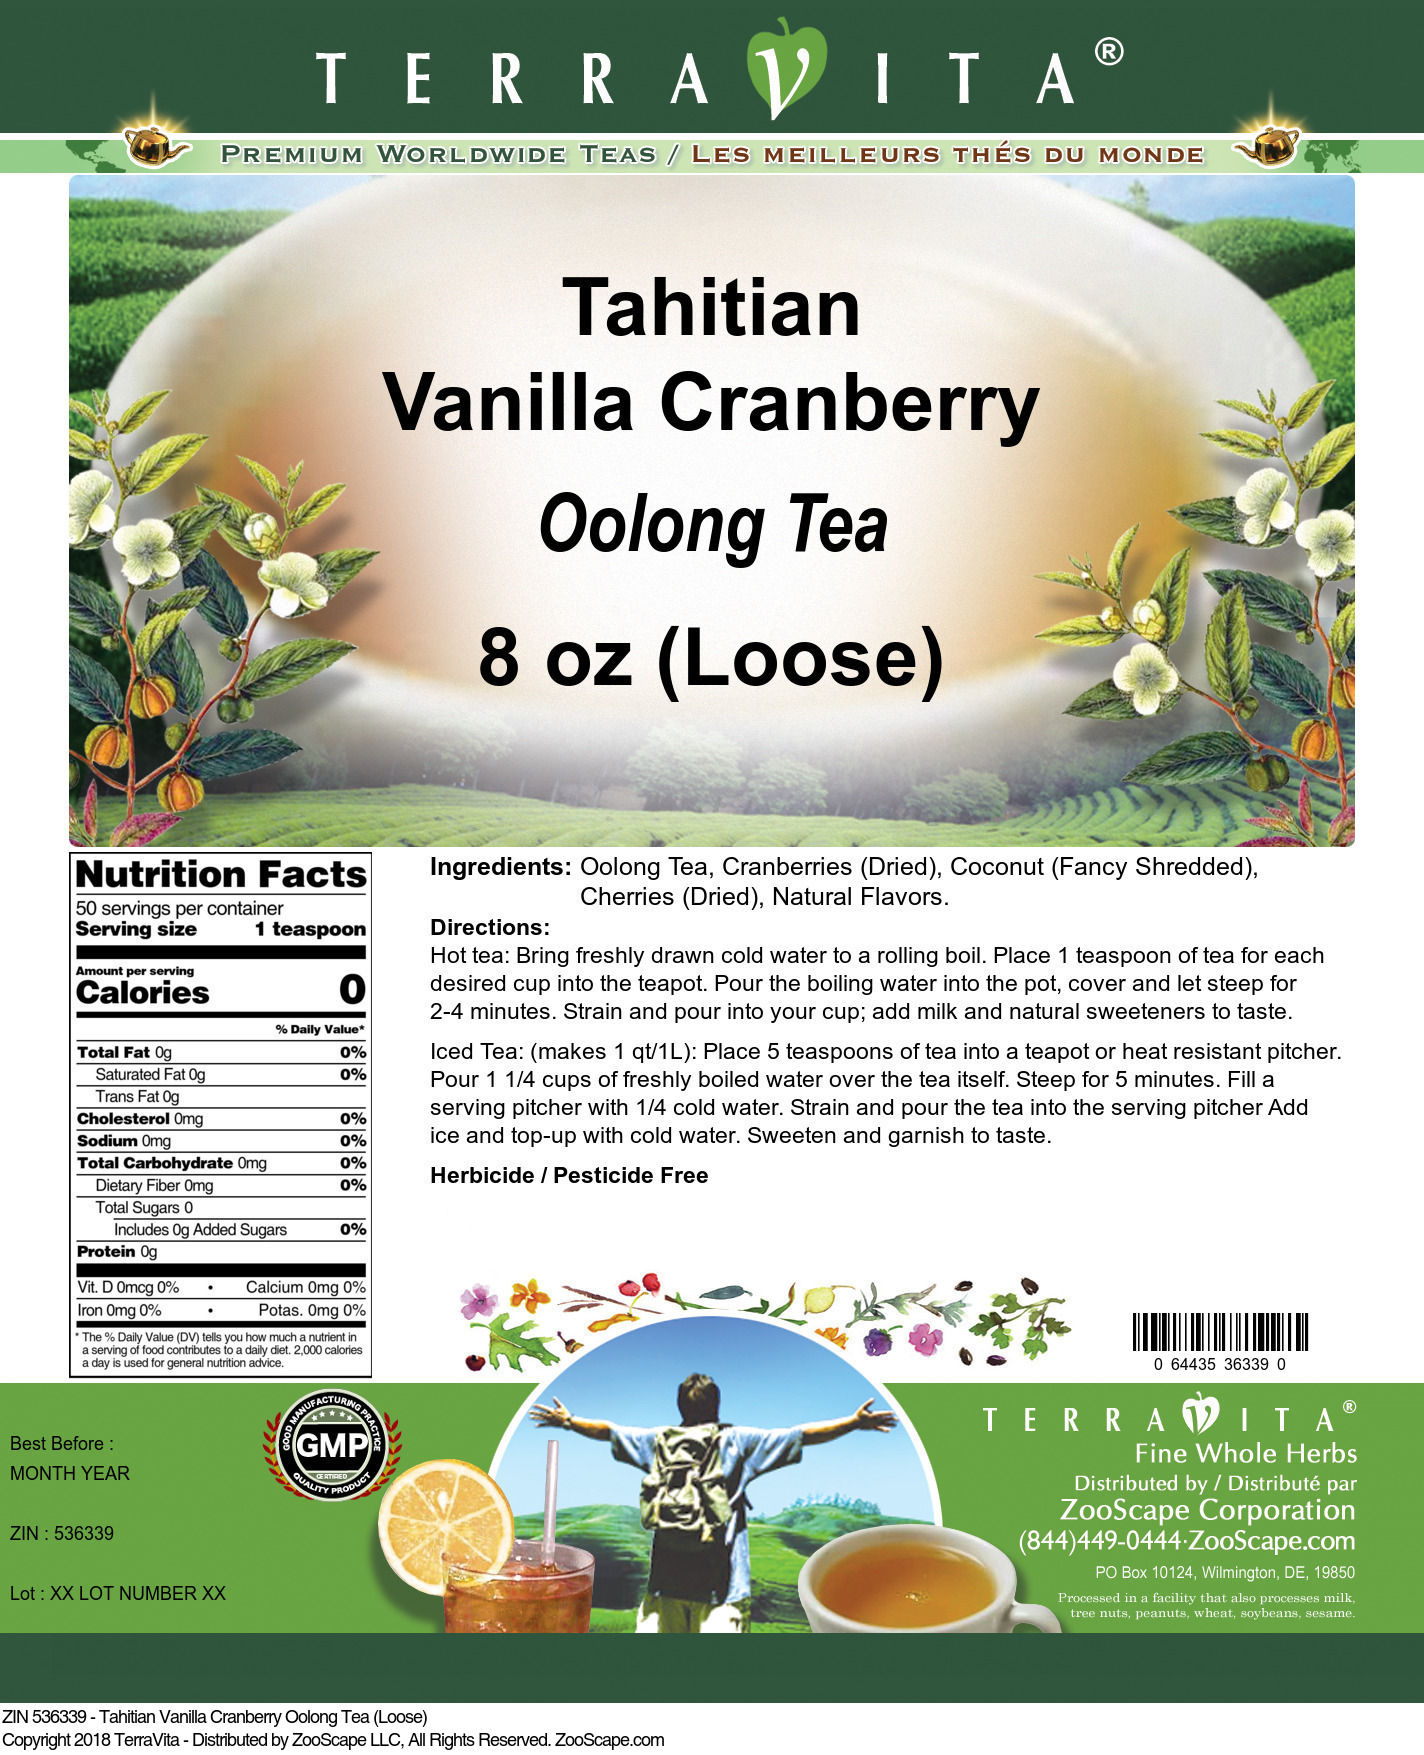 Tahitian Vanilla Cranberry Oolong Tea (Loose) - Label